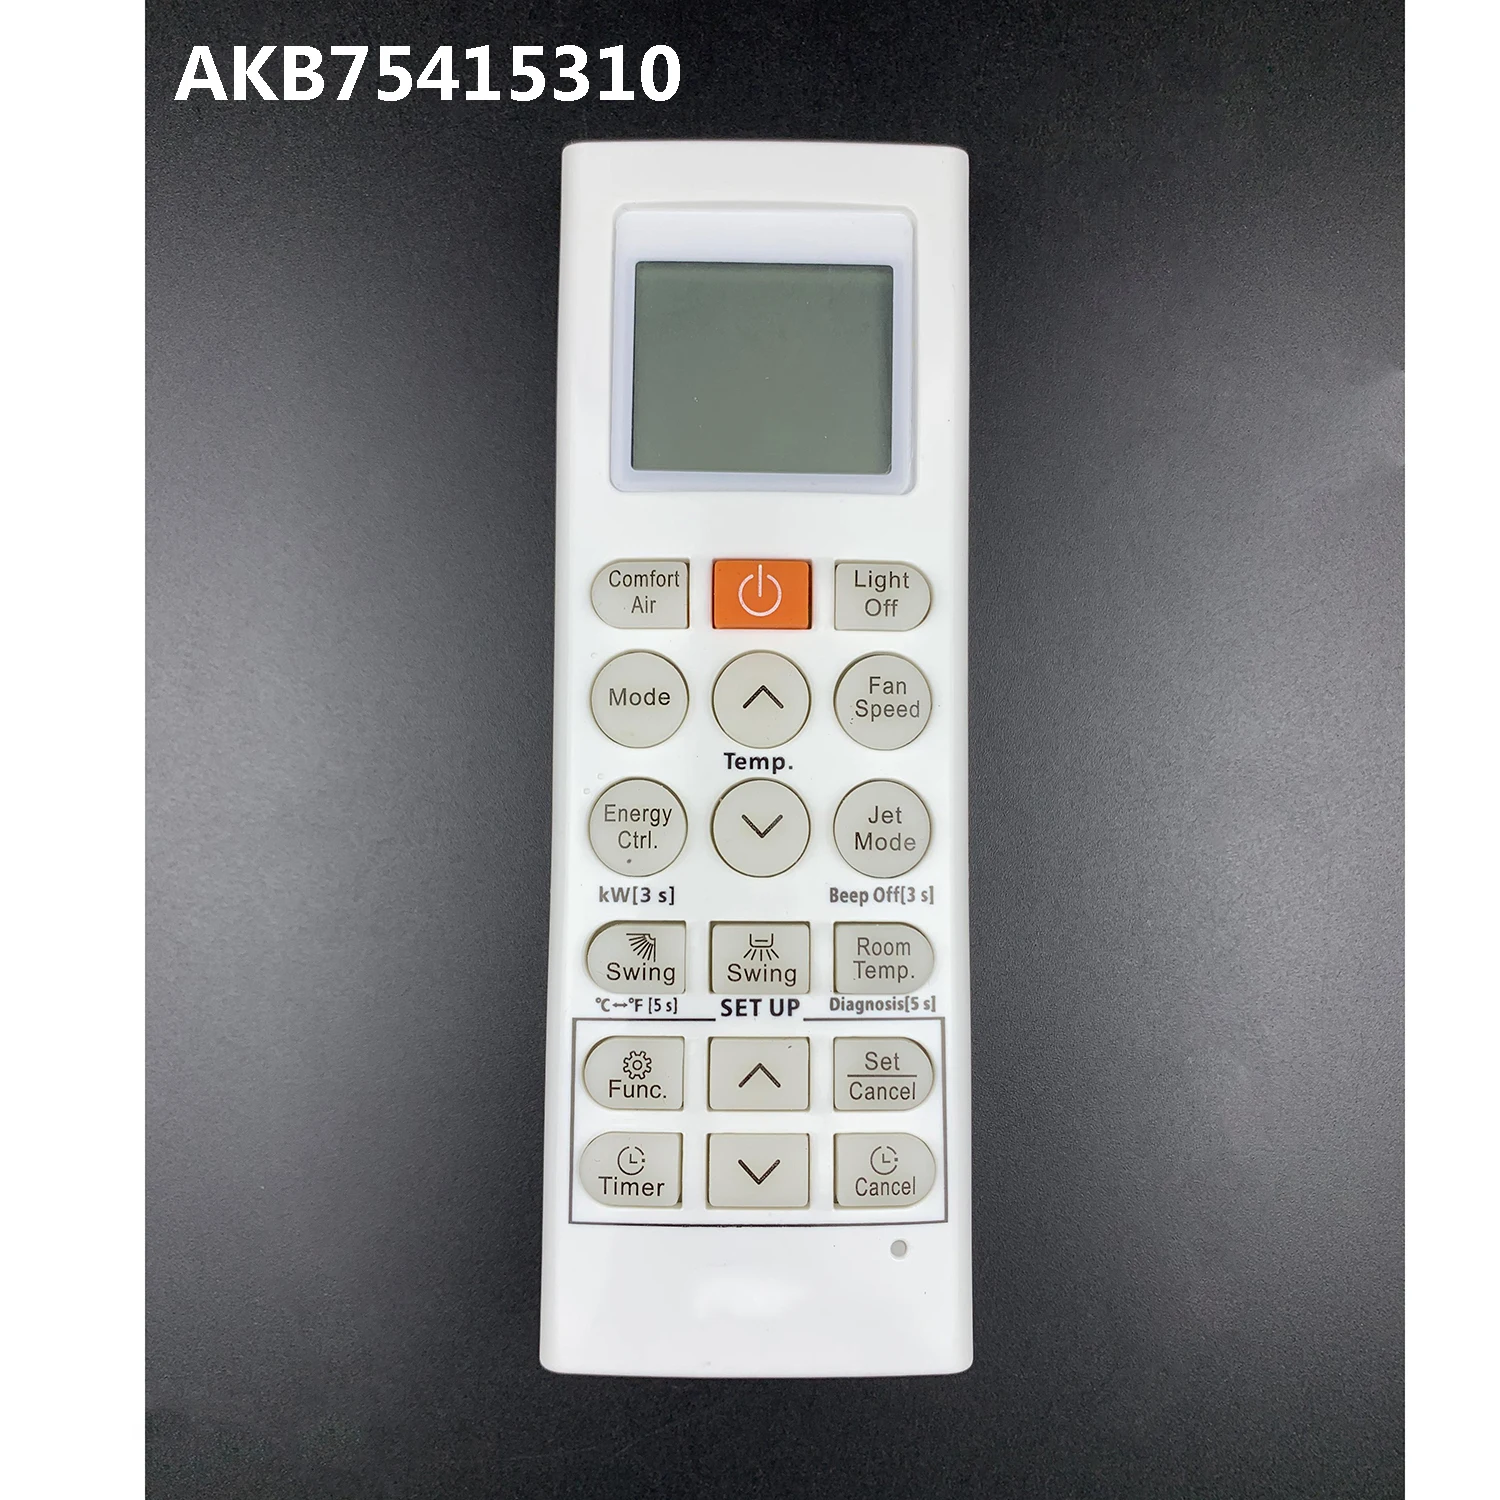 

Новый пульт дистанционного управления AKB75215401 AKB75415310 для кондиционера LG AKB74955605 AKB74075602 AKB74955617